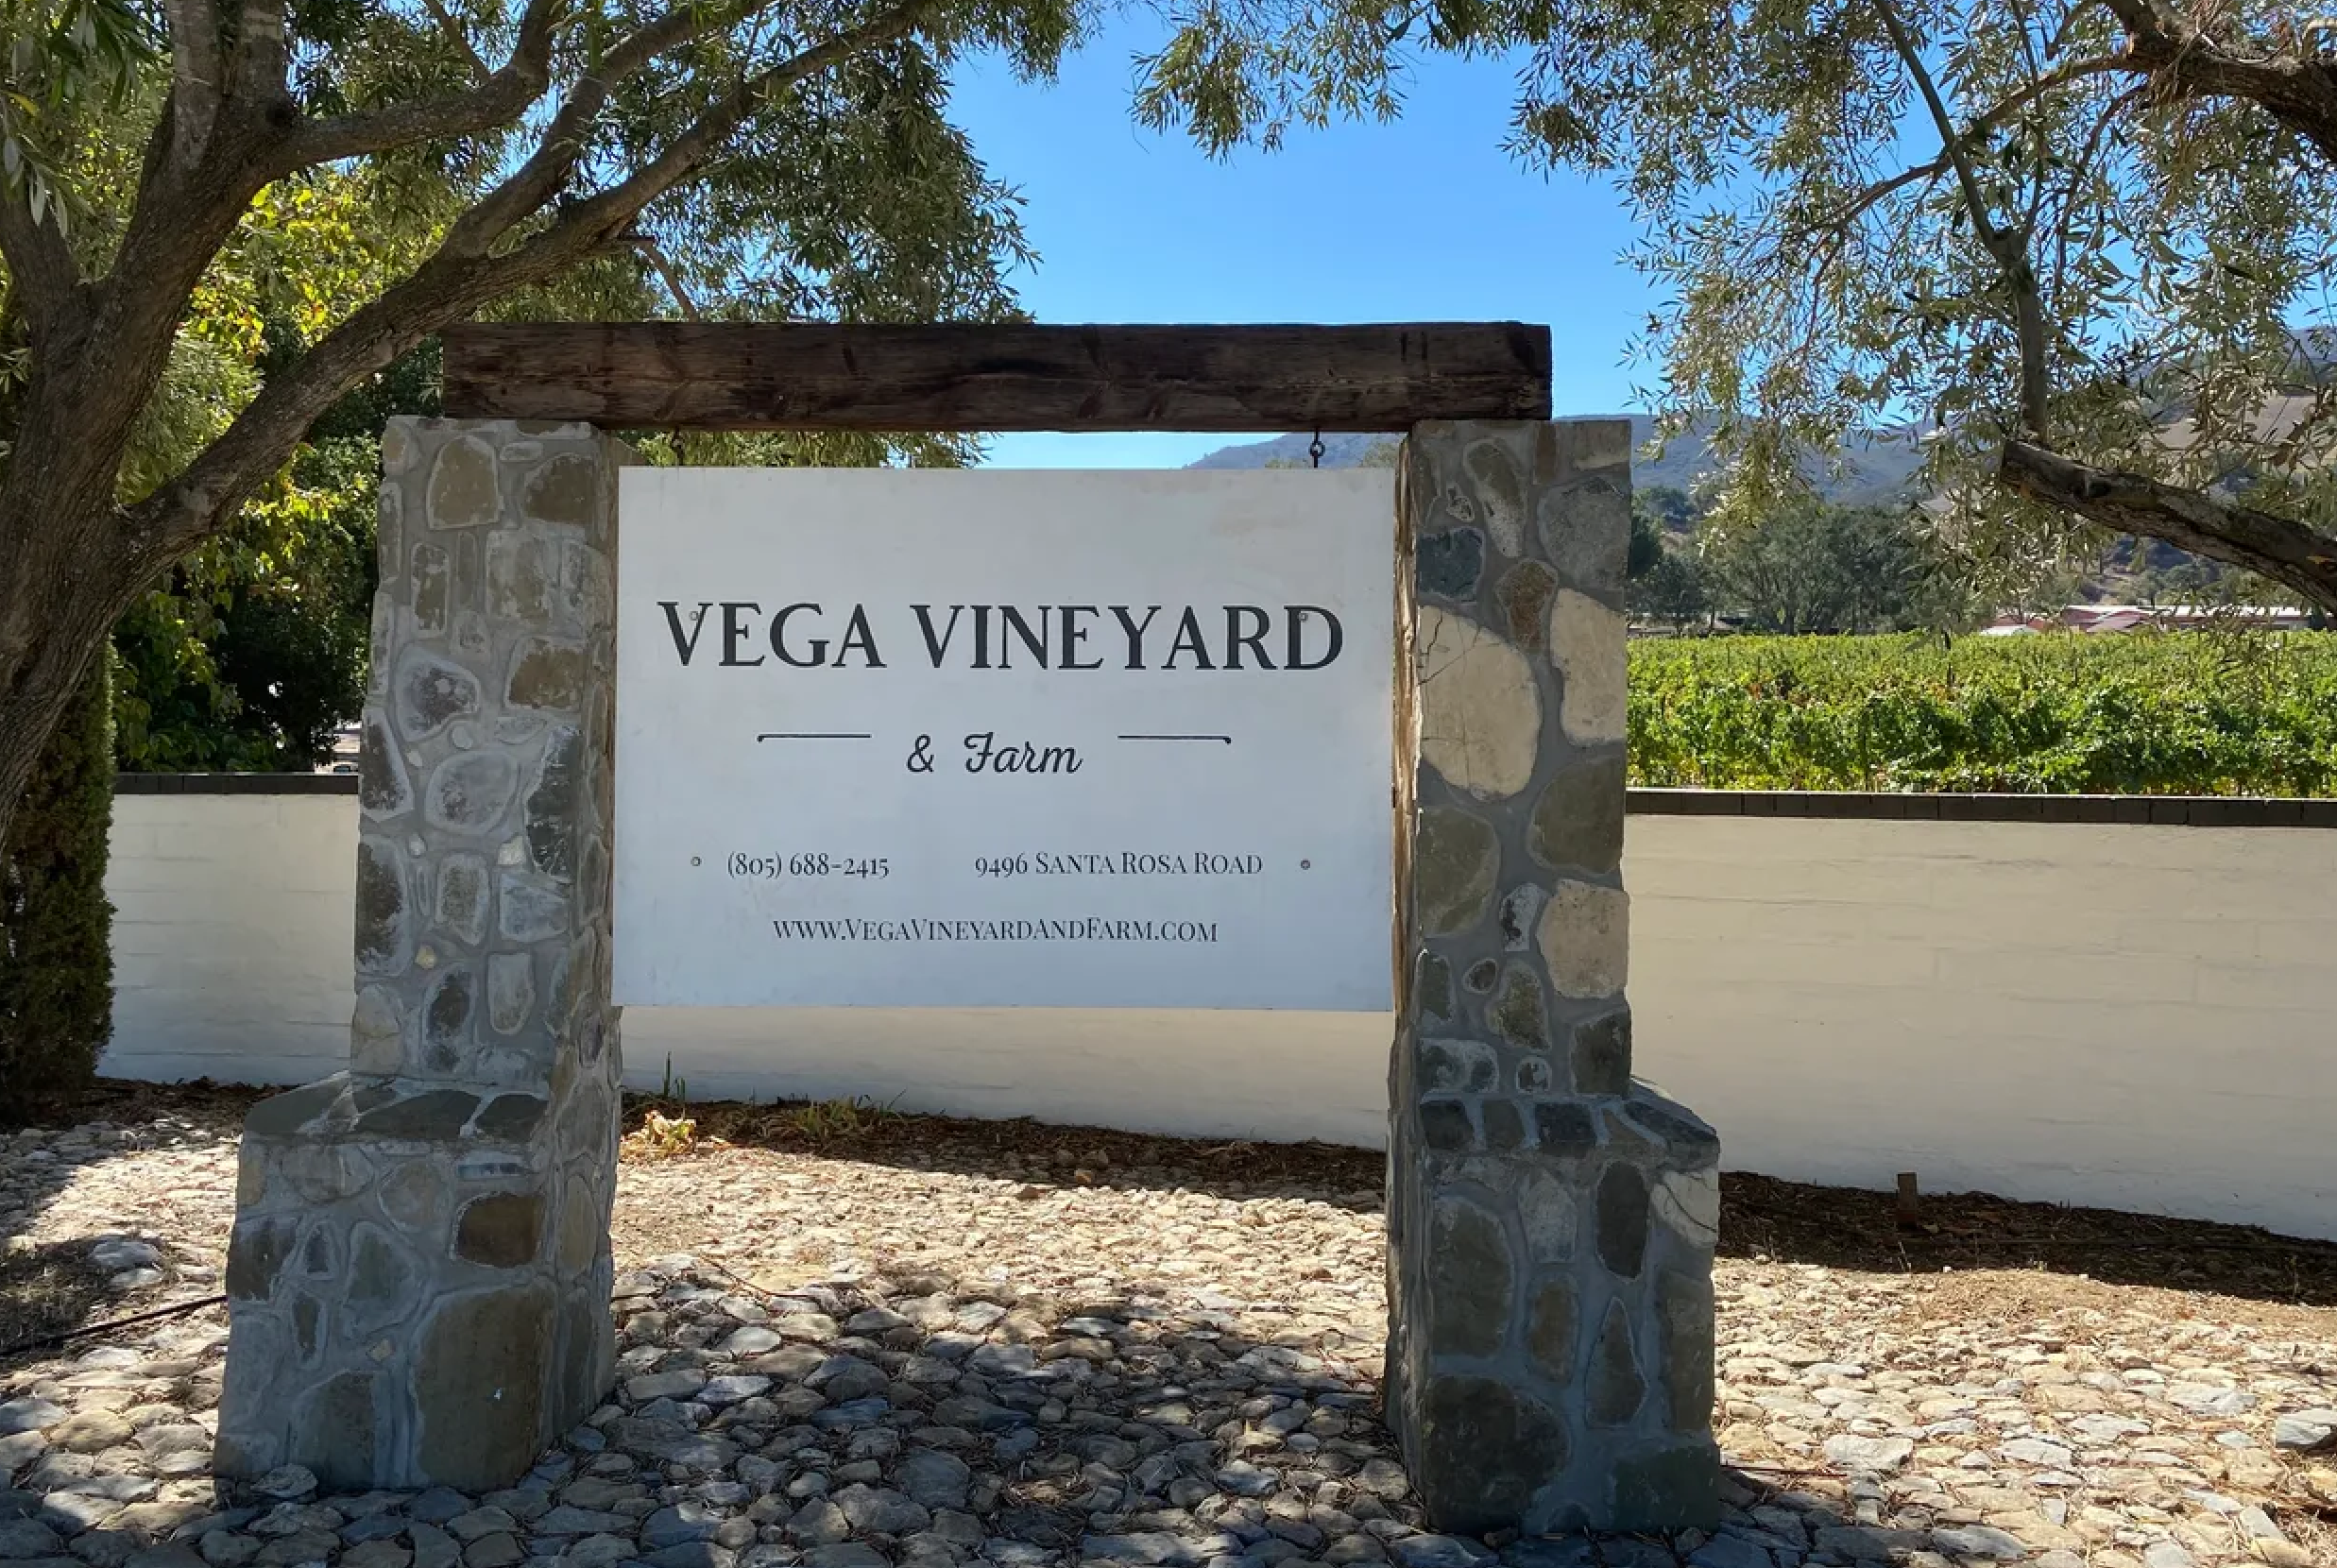 Vega Vineyard & Farm Now Open, Serving Food and Wine in Buellton